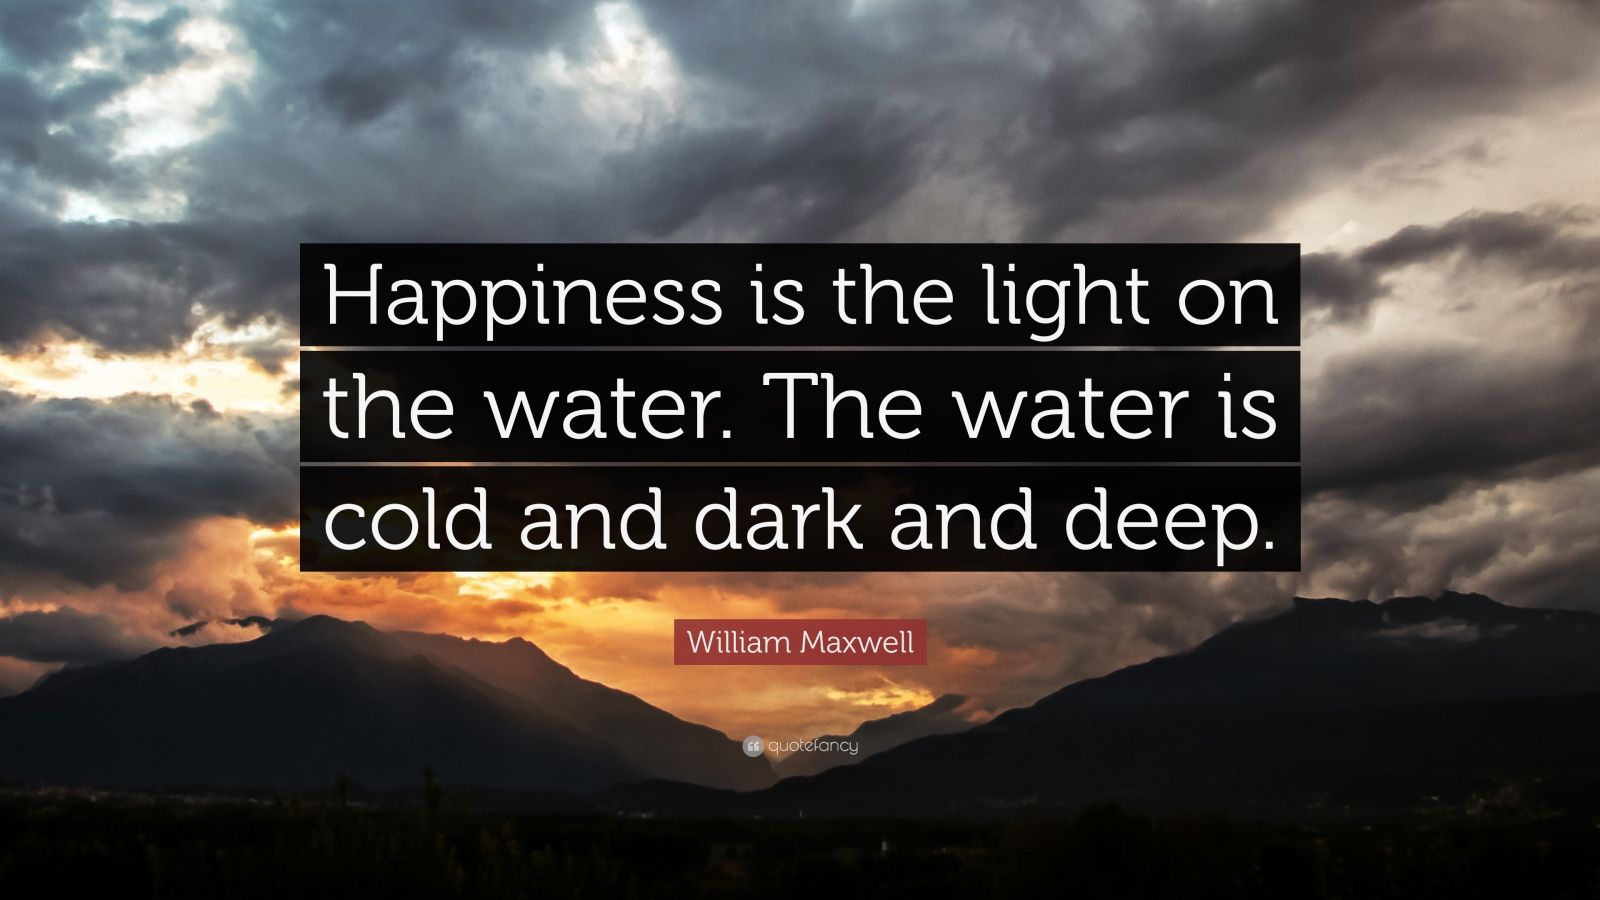 happiness like water